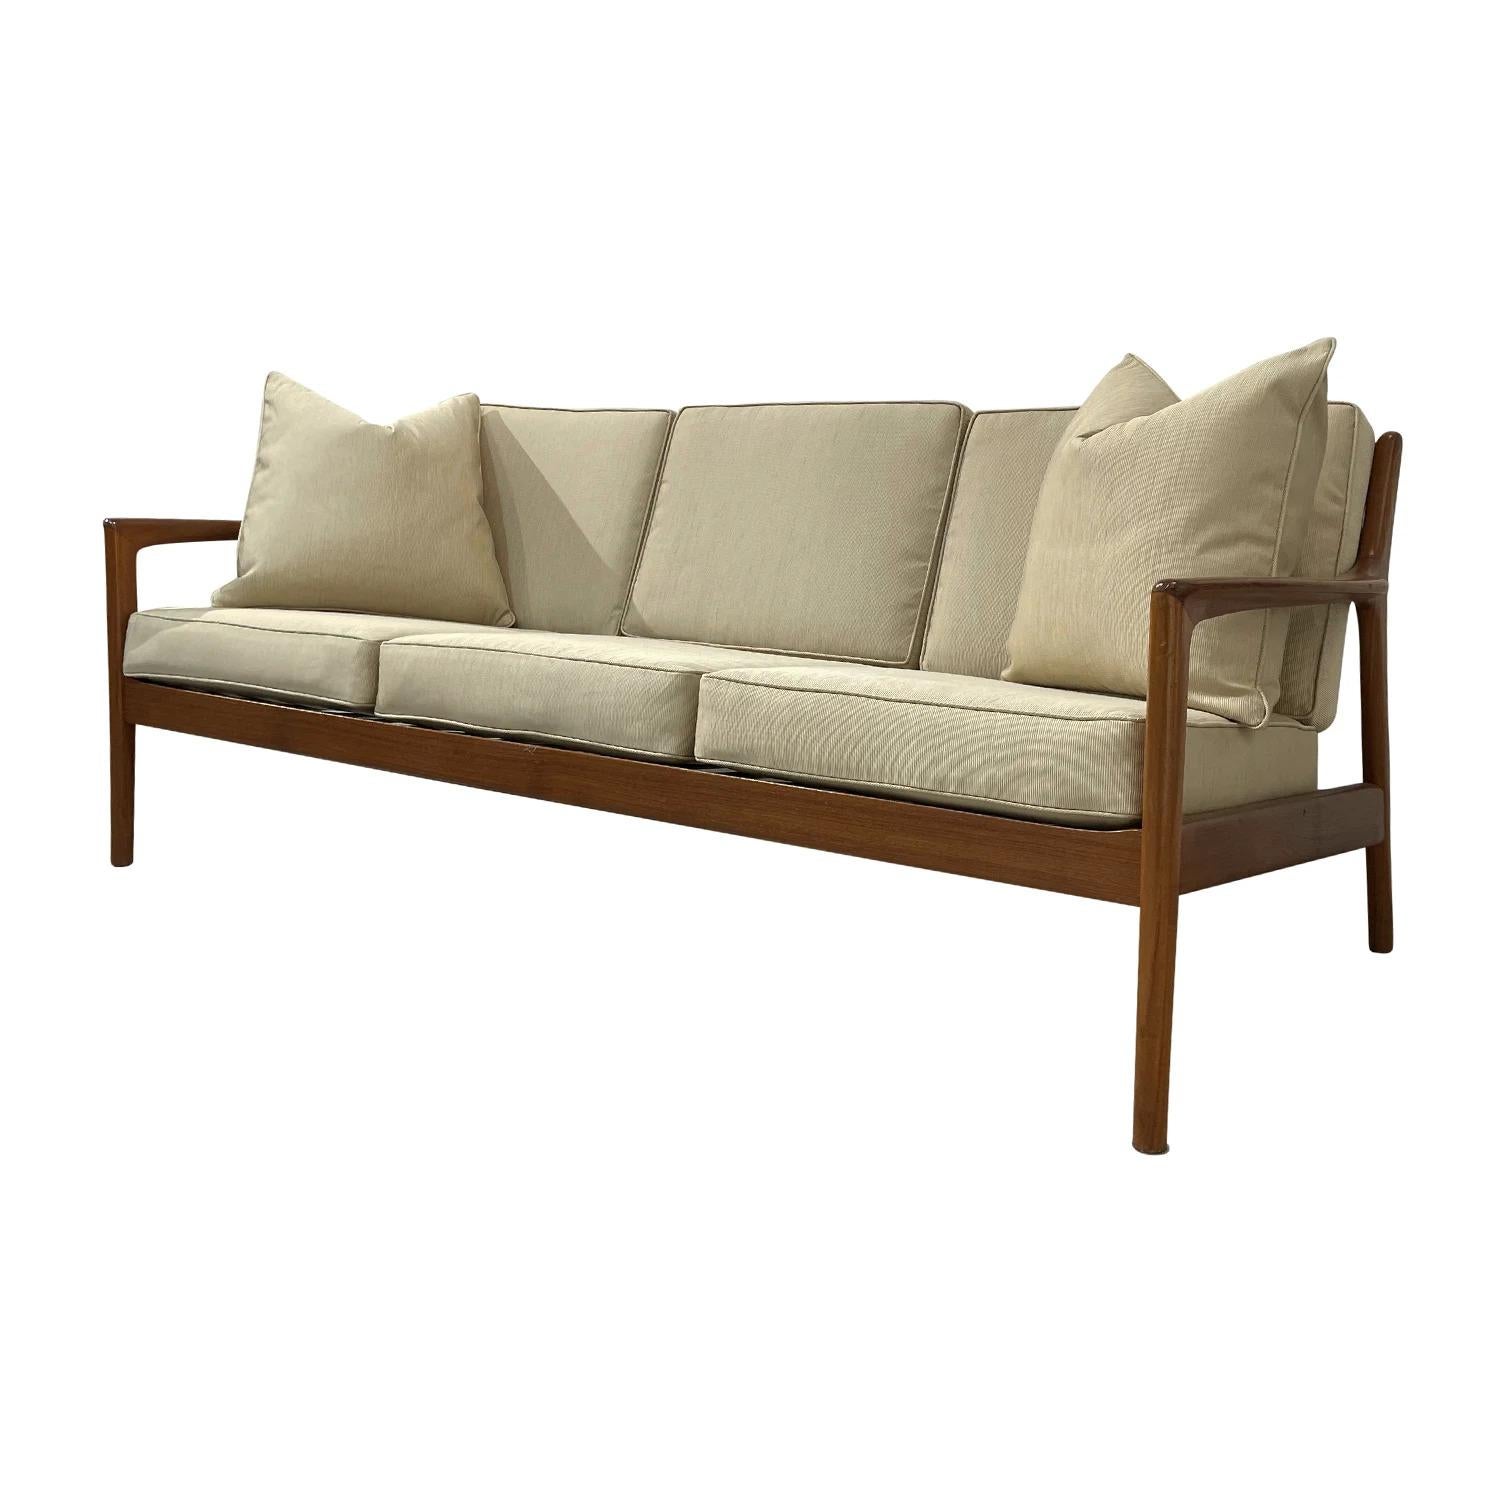 Fabric 20th Century Swedish Dux Three Seater Teak Sofa, Vintage Settee by Folke Ohlsson For Sale